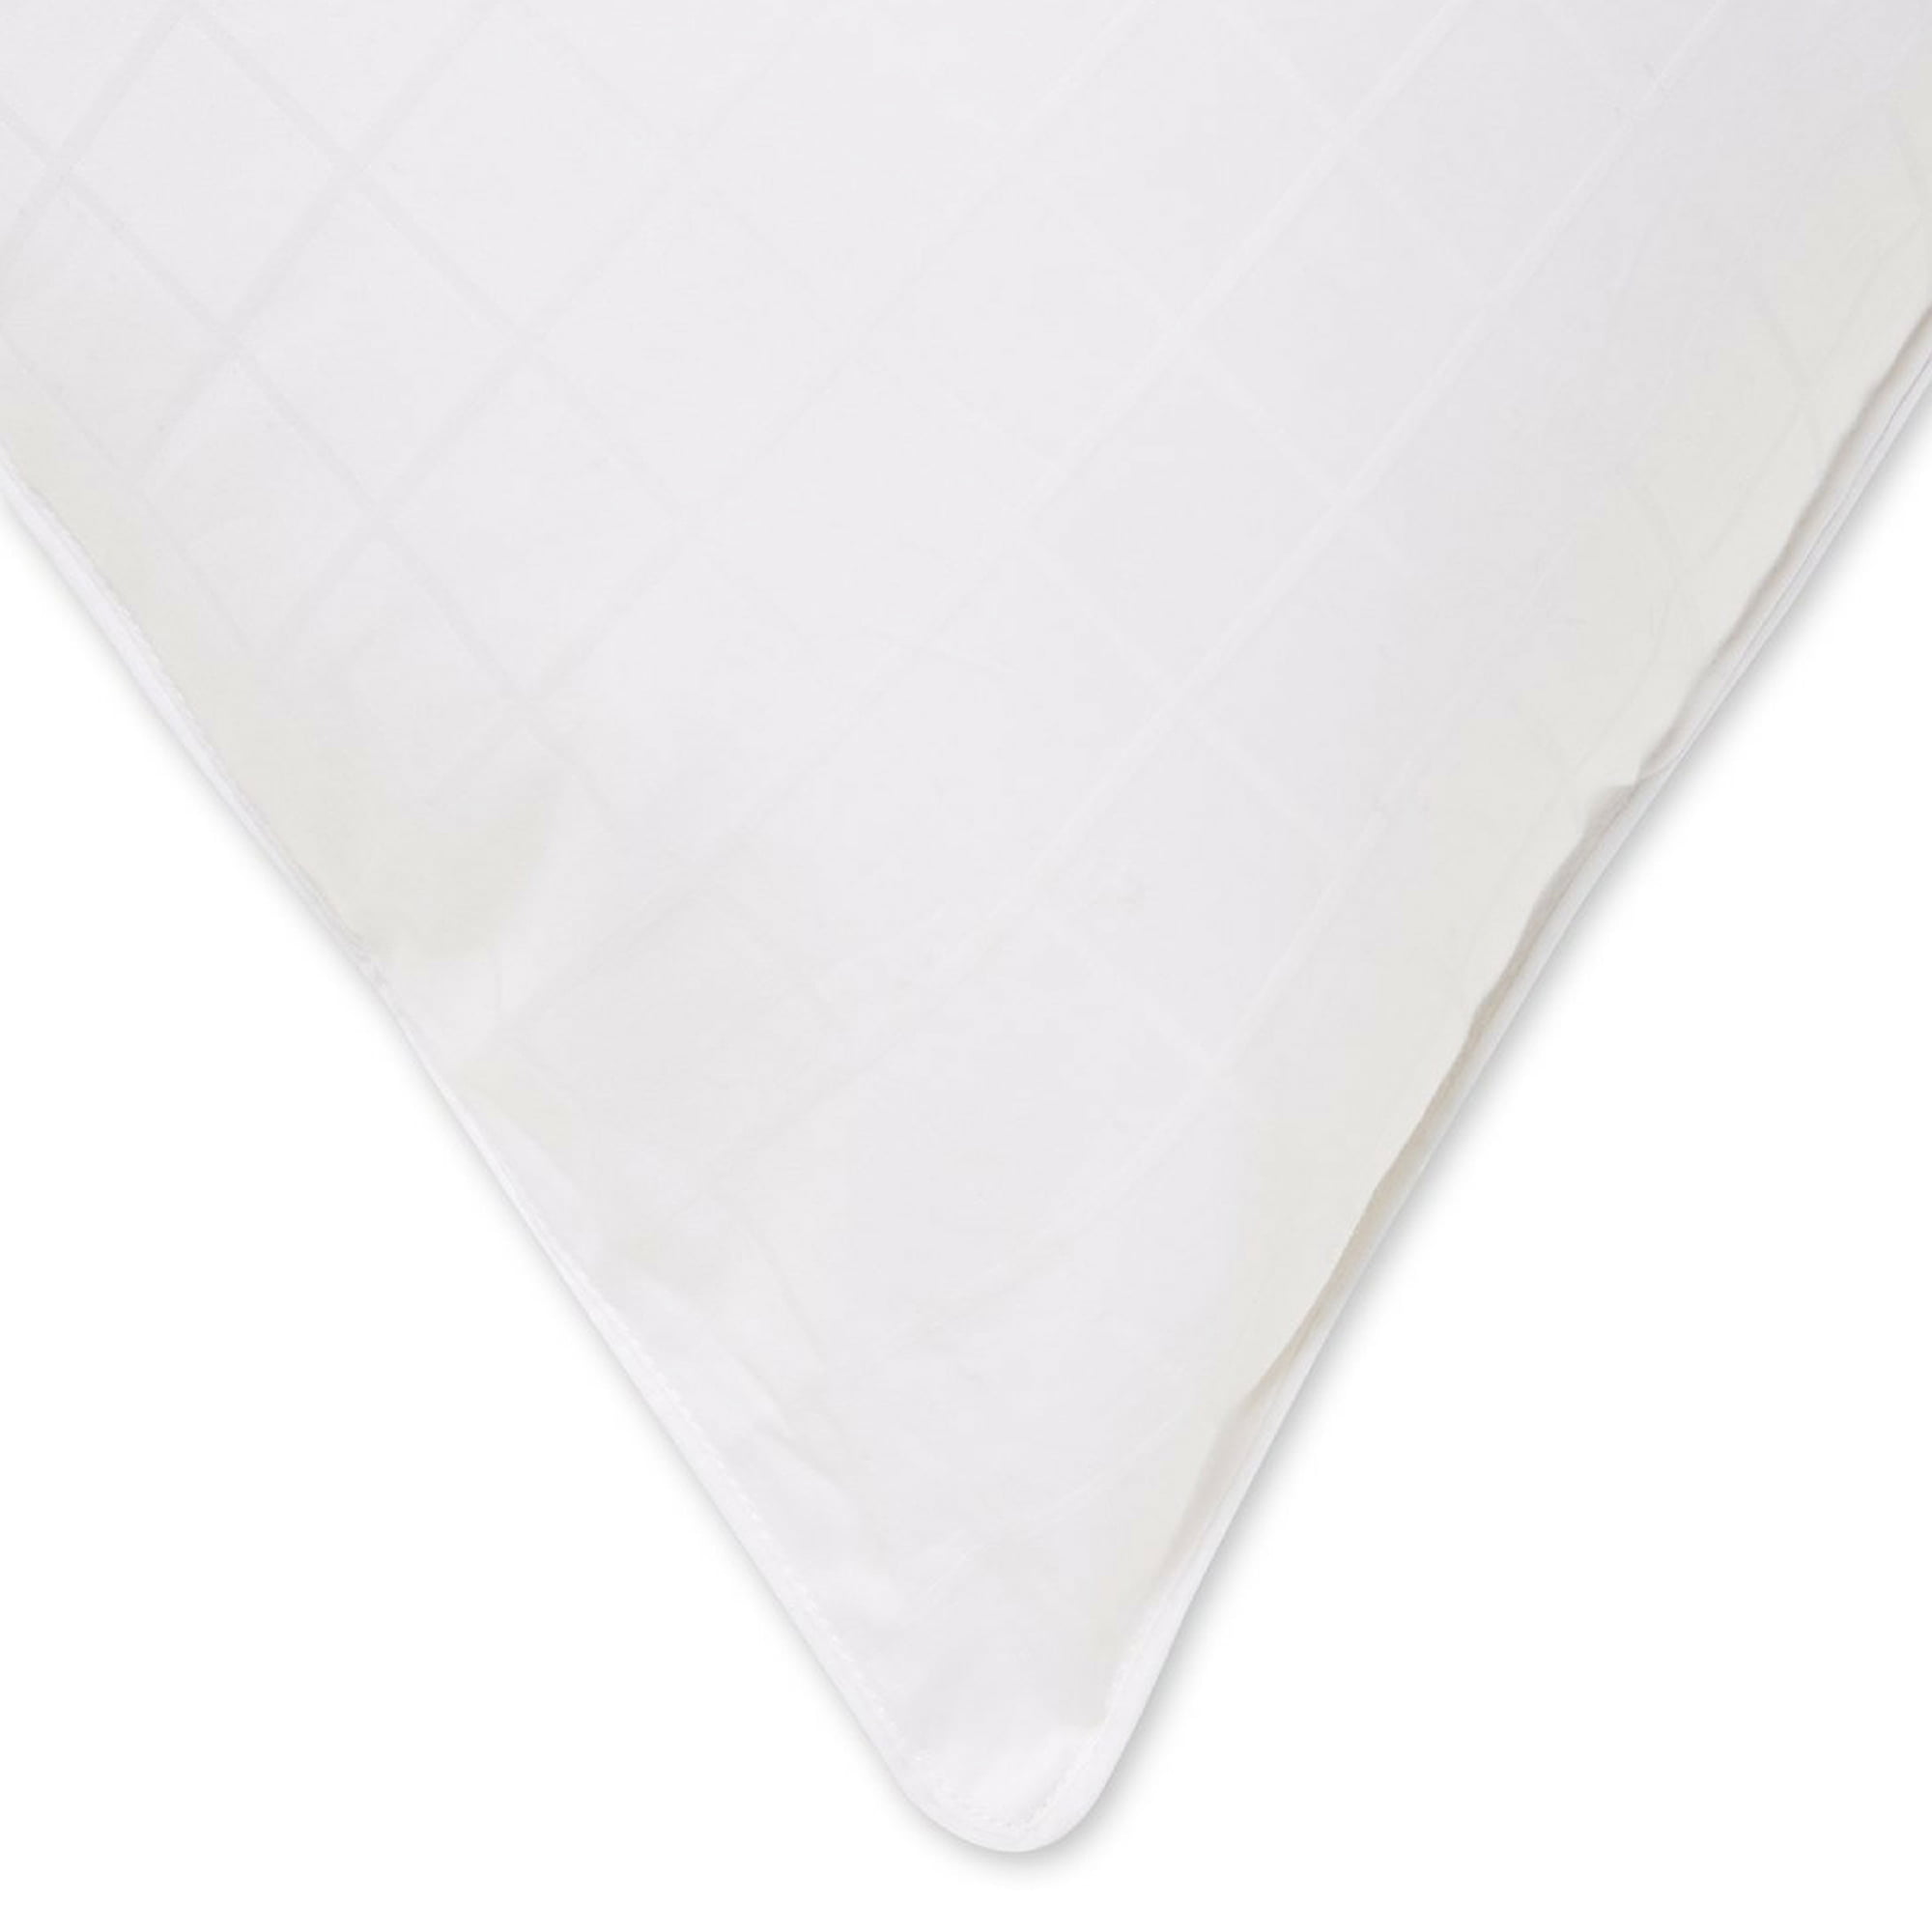 Ella Jayne 100% Cotton Dobby-Box Shell Soft Stomach Sleeper Down Alternative Pillow, Set of 4 - Standard